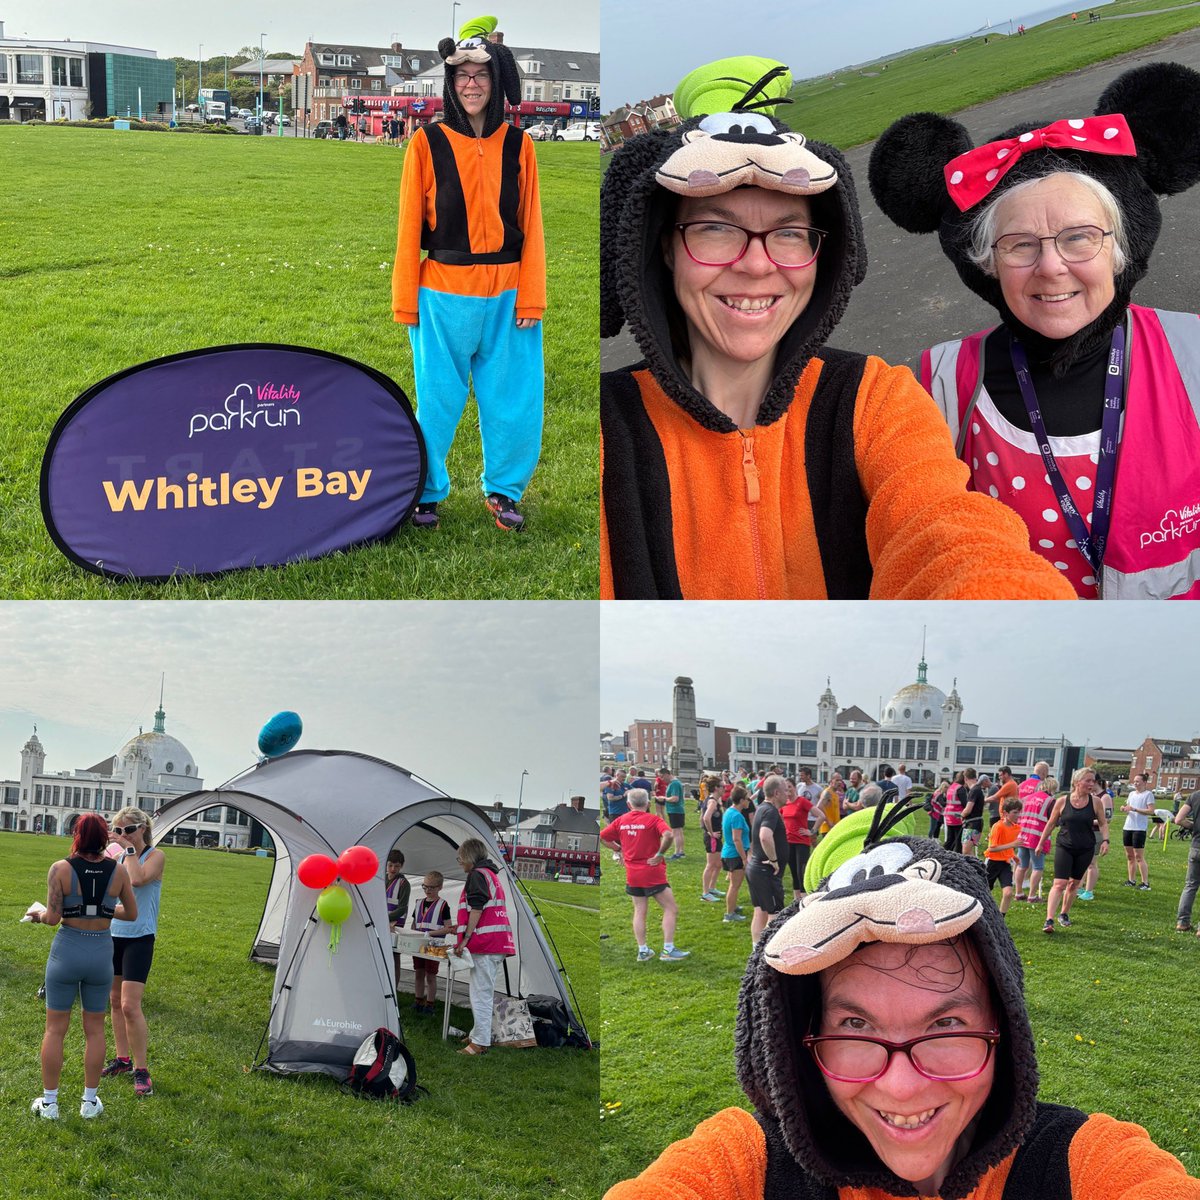 Such a fabulous morning celebrating the 500th Whitley Bay Parkrun @WhitBayparkrun #parkrun #dfyb #whitleybayparkrun #whitleybay